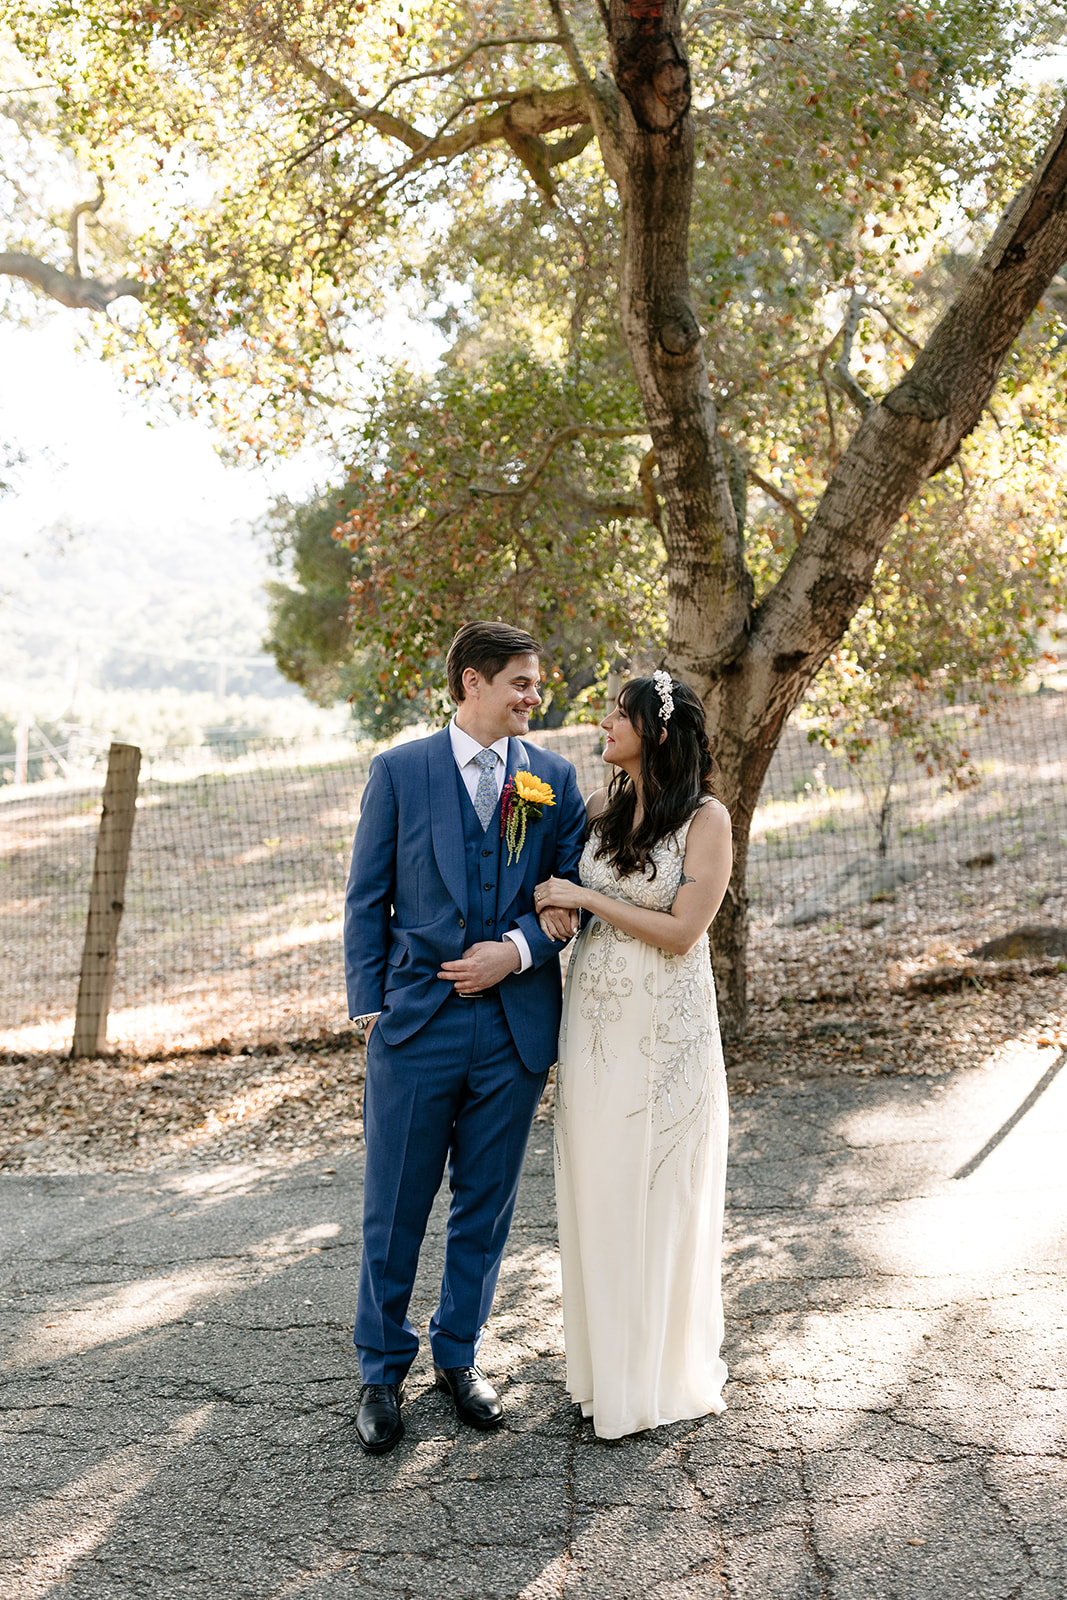 inn of the seventh ray wedding topanga california socal bridal portraits navy blue wedding suit sunflowers bright flower